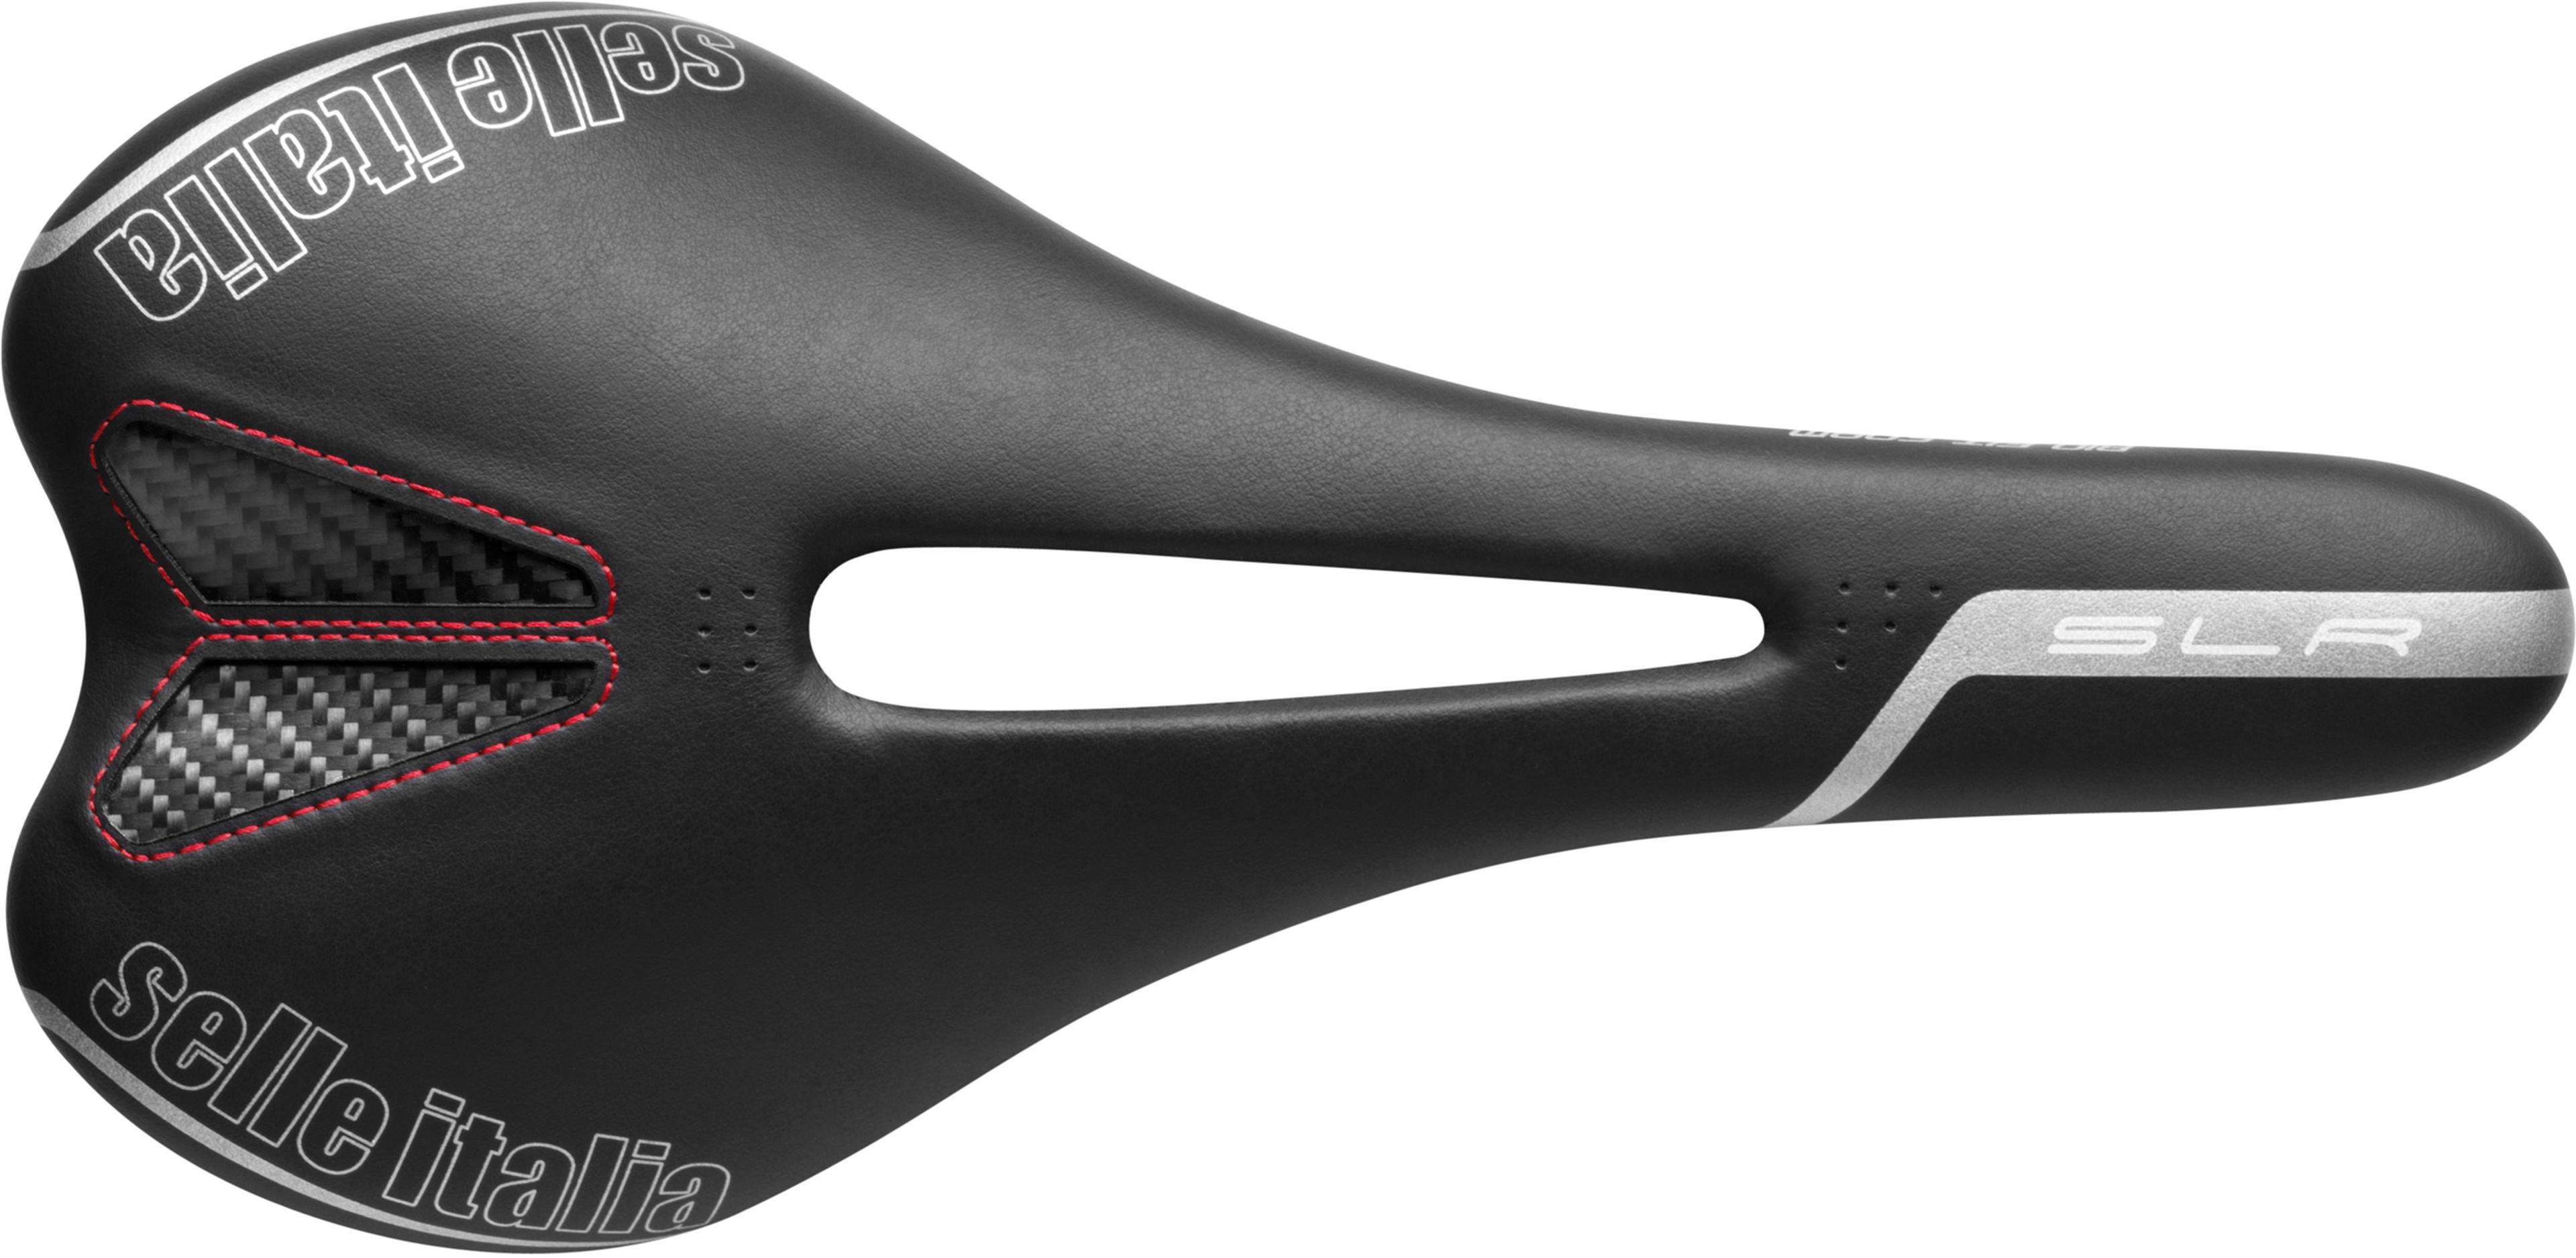 Selle Italia SLR Kit Carbonio Flow Open-Fit Saddle with Carbon